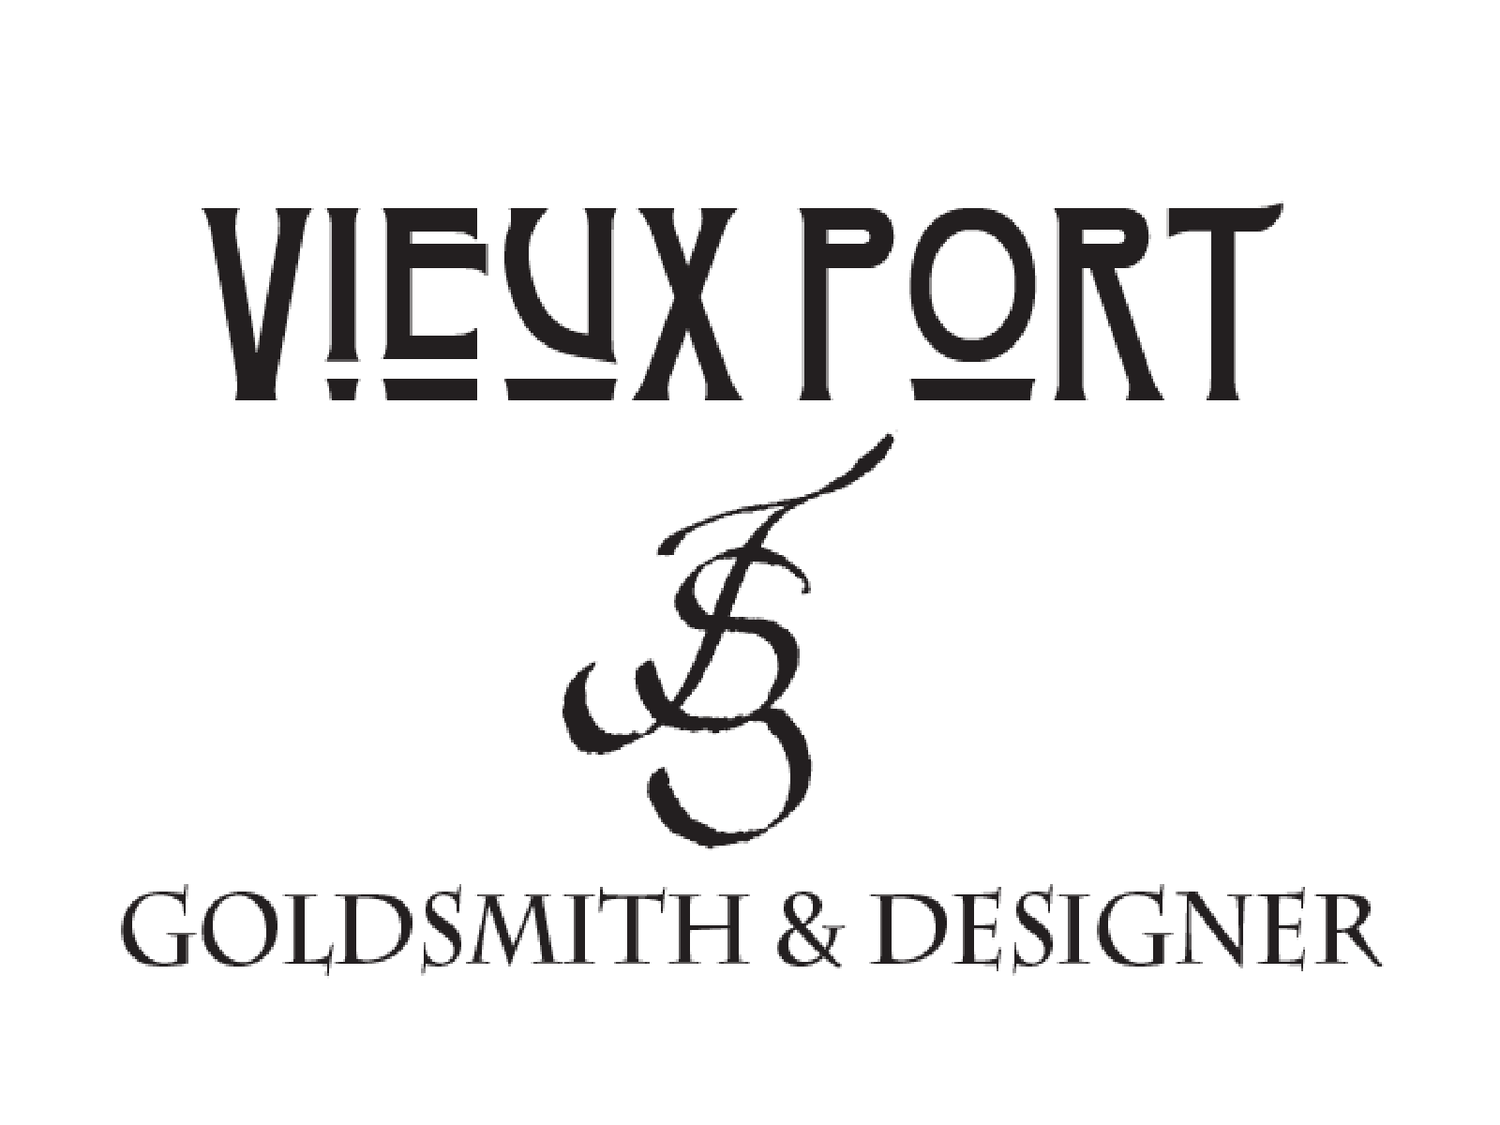 Vieux Port Goldsmith